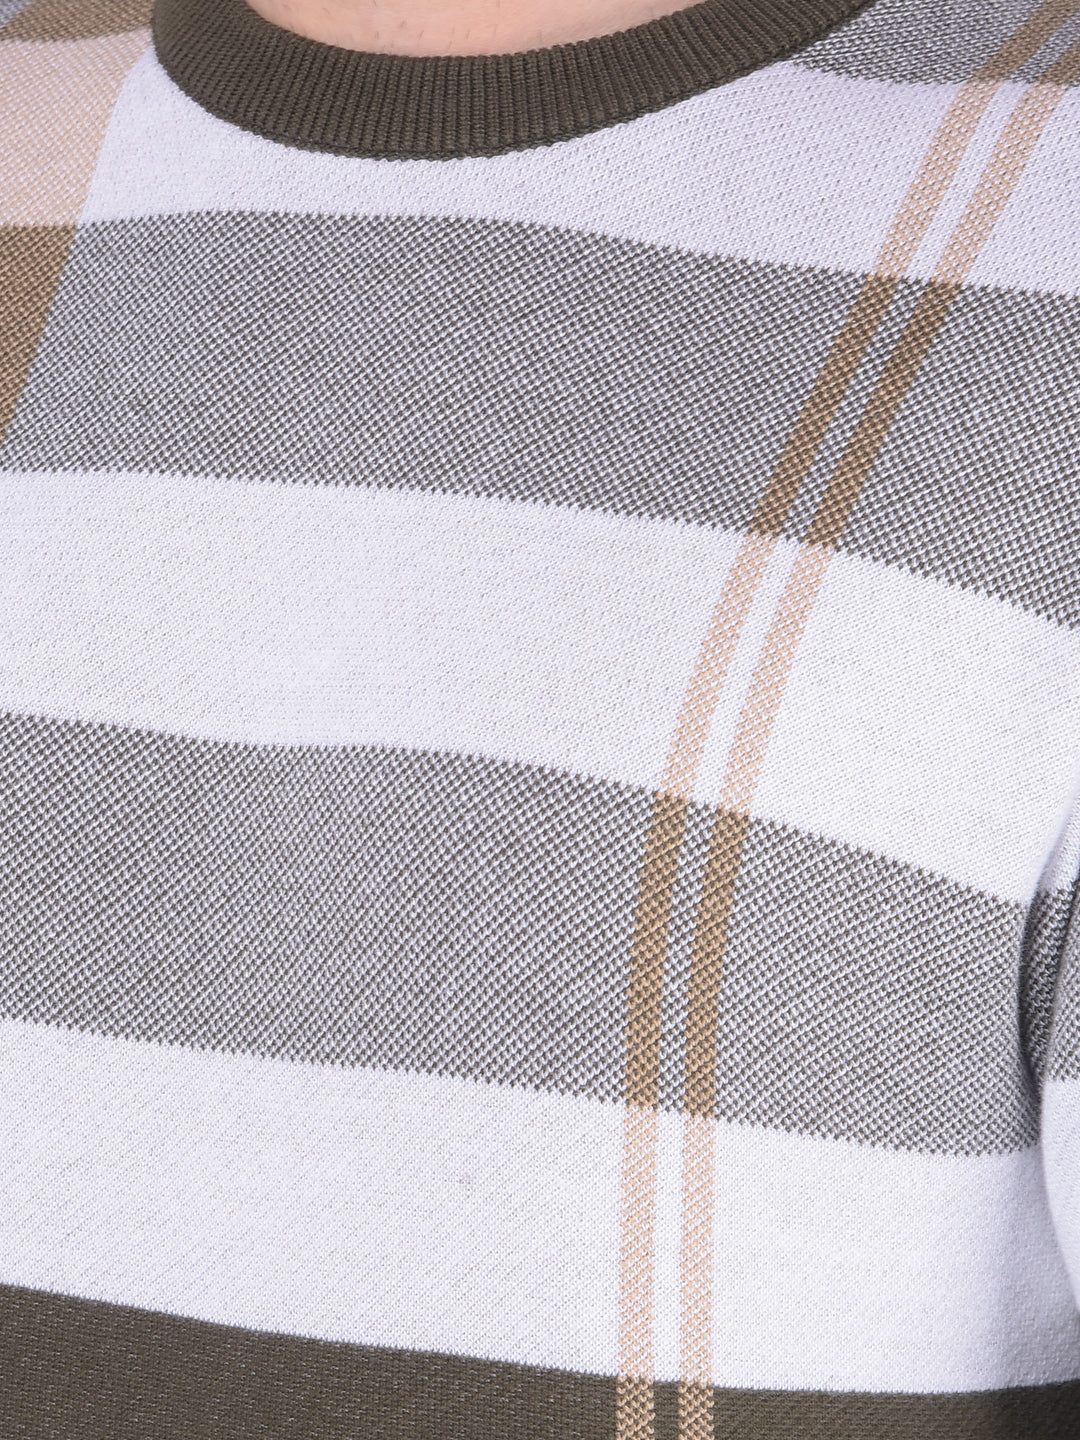 Cobb Brown White Striped Round Neck Sweater